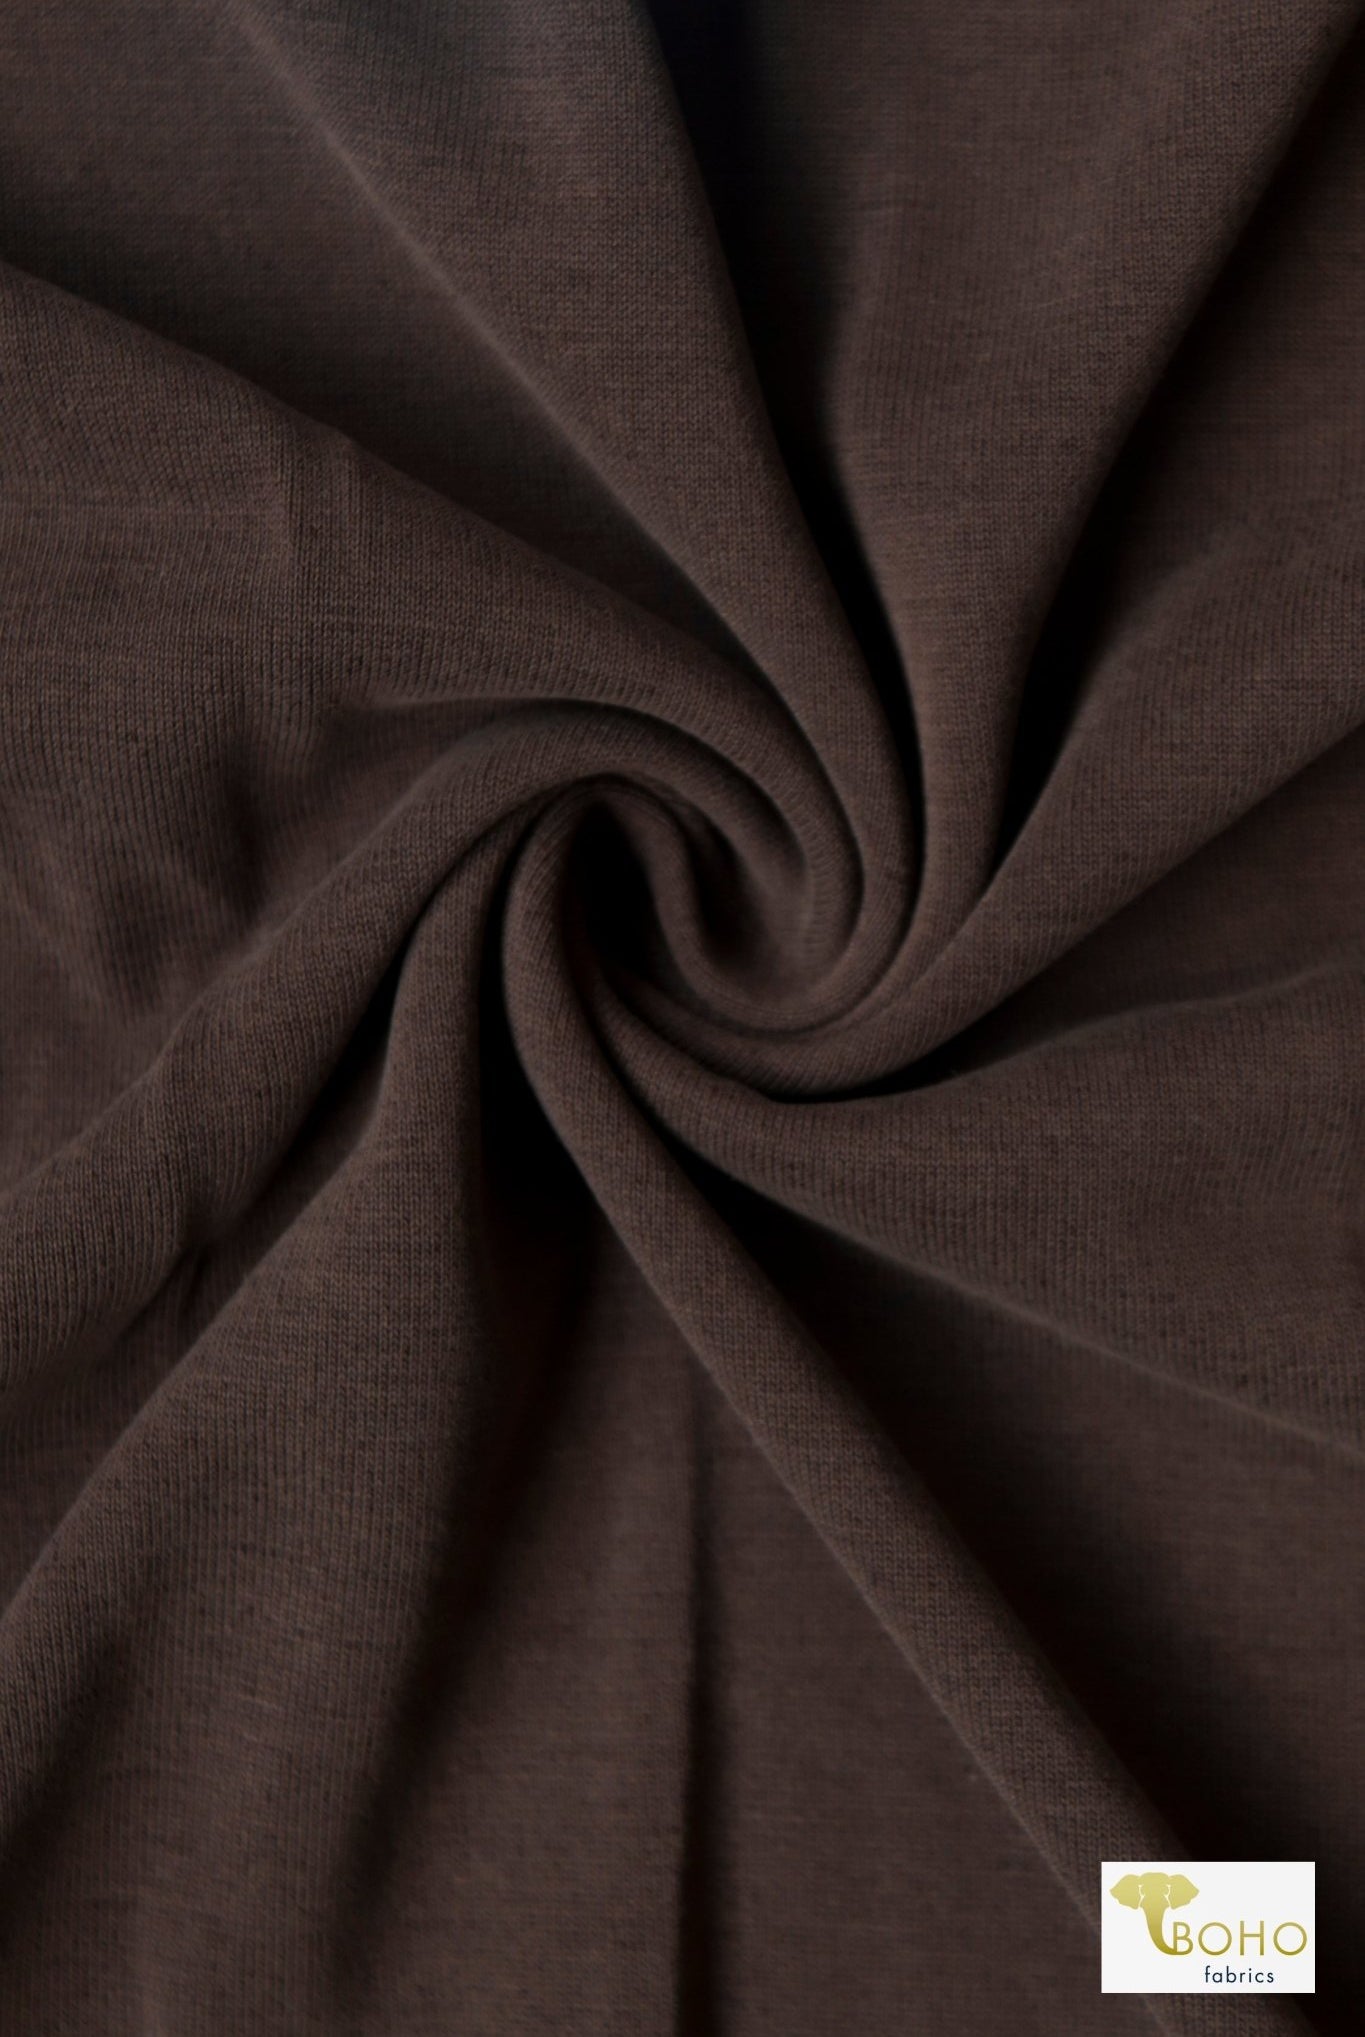 Dark Chocolate, Solid Cupro Knit Fabric - Boho Fabrics - Cupro, Knit Fabric